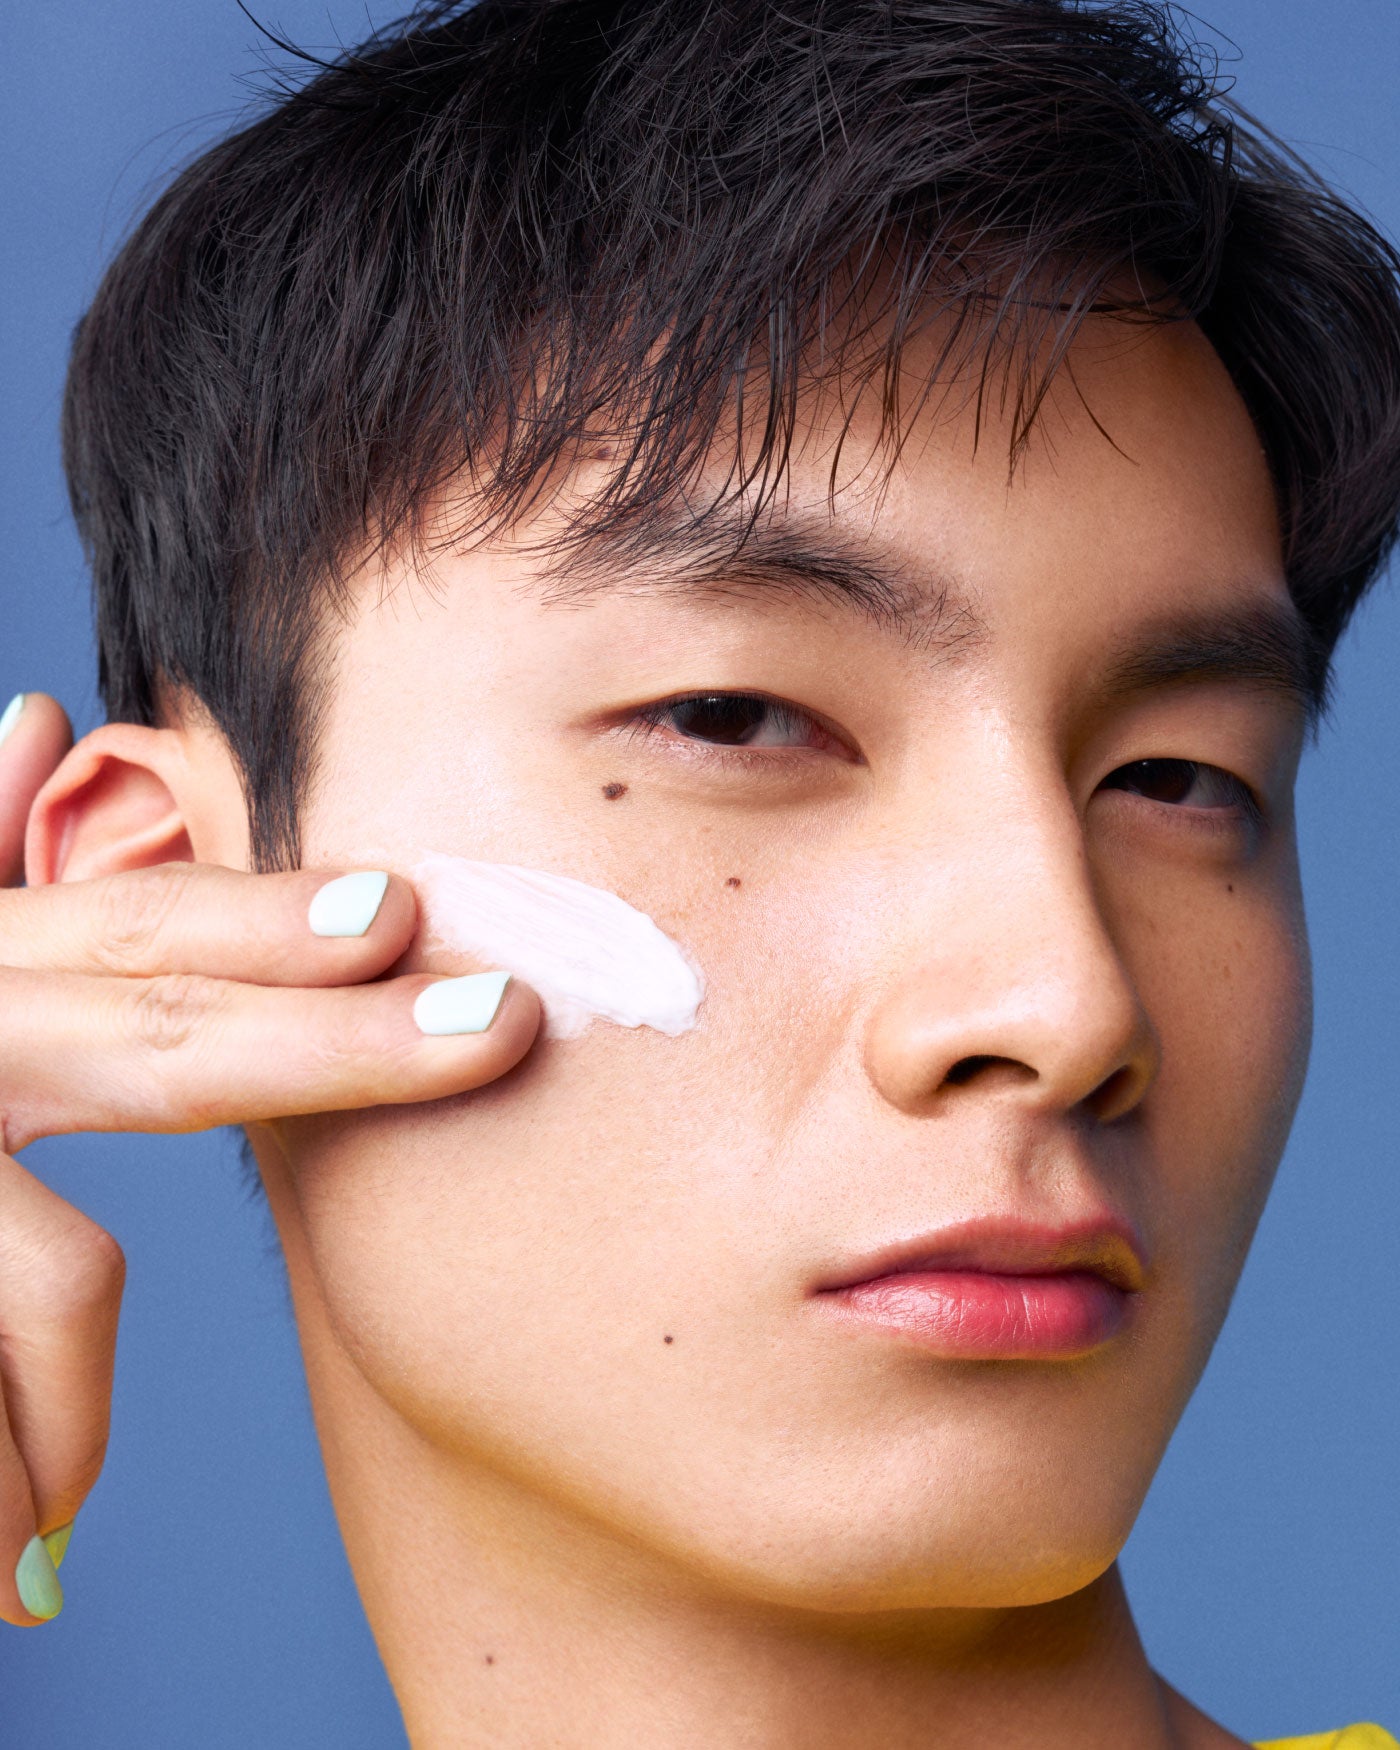 CREMA VISO - Formula Ricca e Nutriente - Set Skin - Pelle Normale/Mista - Astra Make-Up